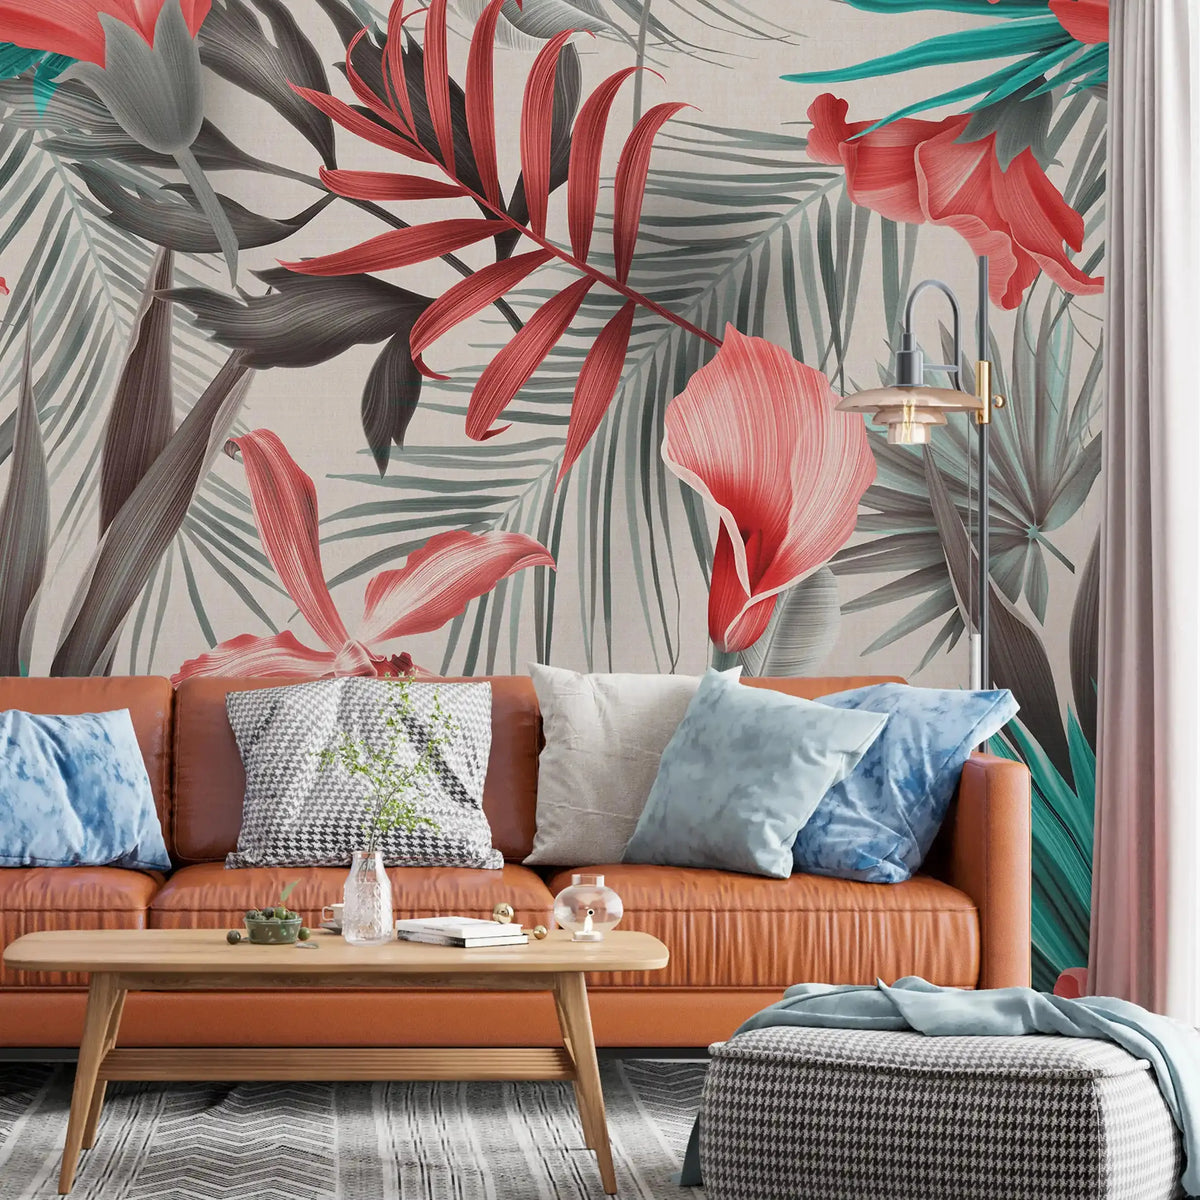 3073-C / Self-Adhesive Wall Mural, Exotic Green & Pink Leaves, Watercolor Botanical Wallpaper for Modern Home Decor - Artevella